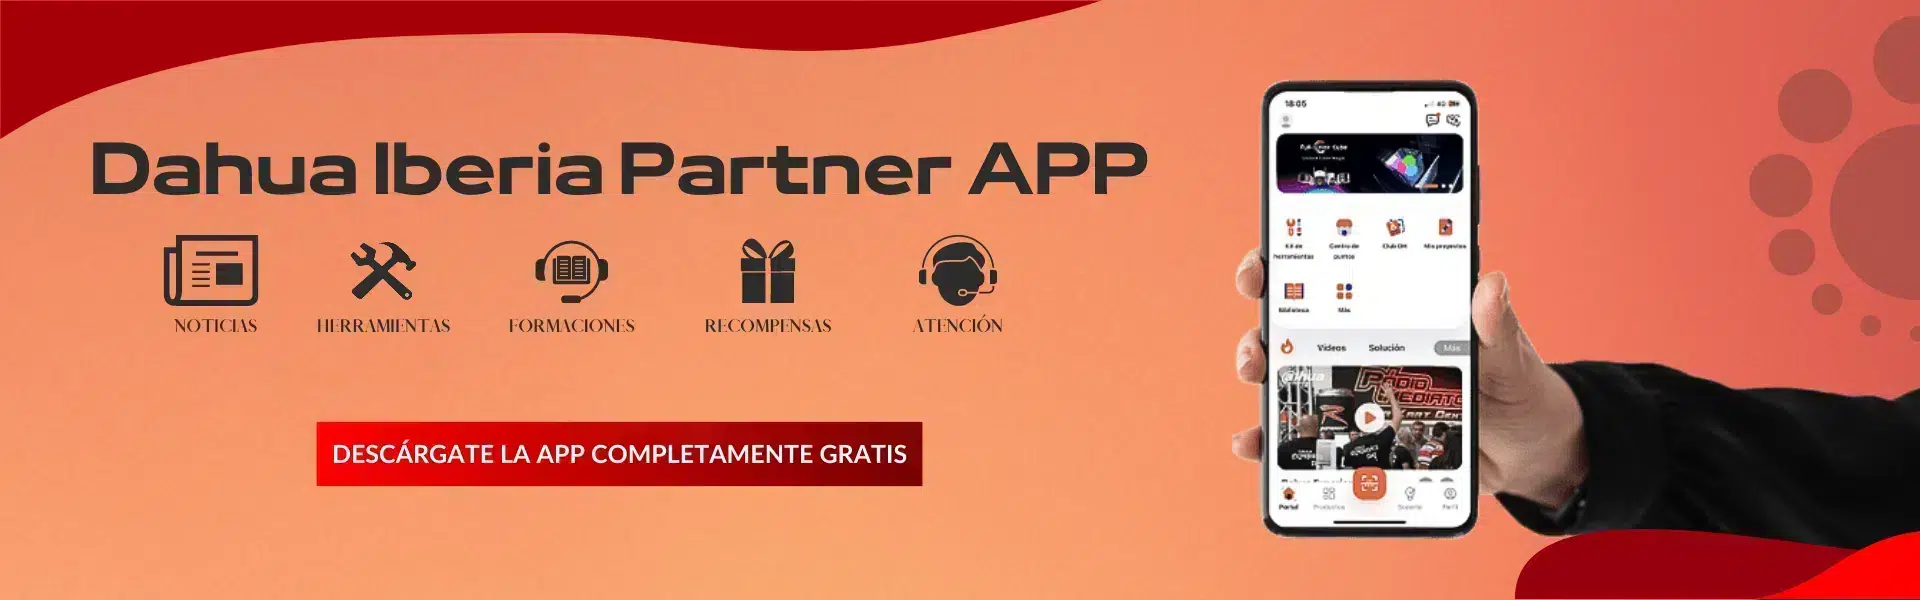 Dahua Partner App